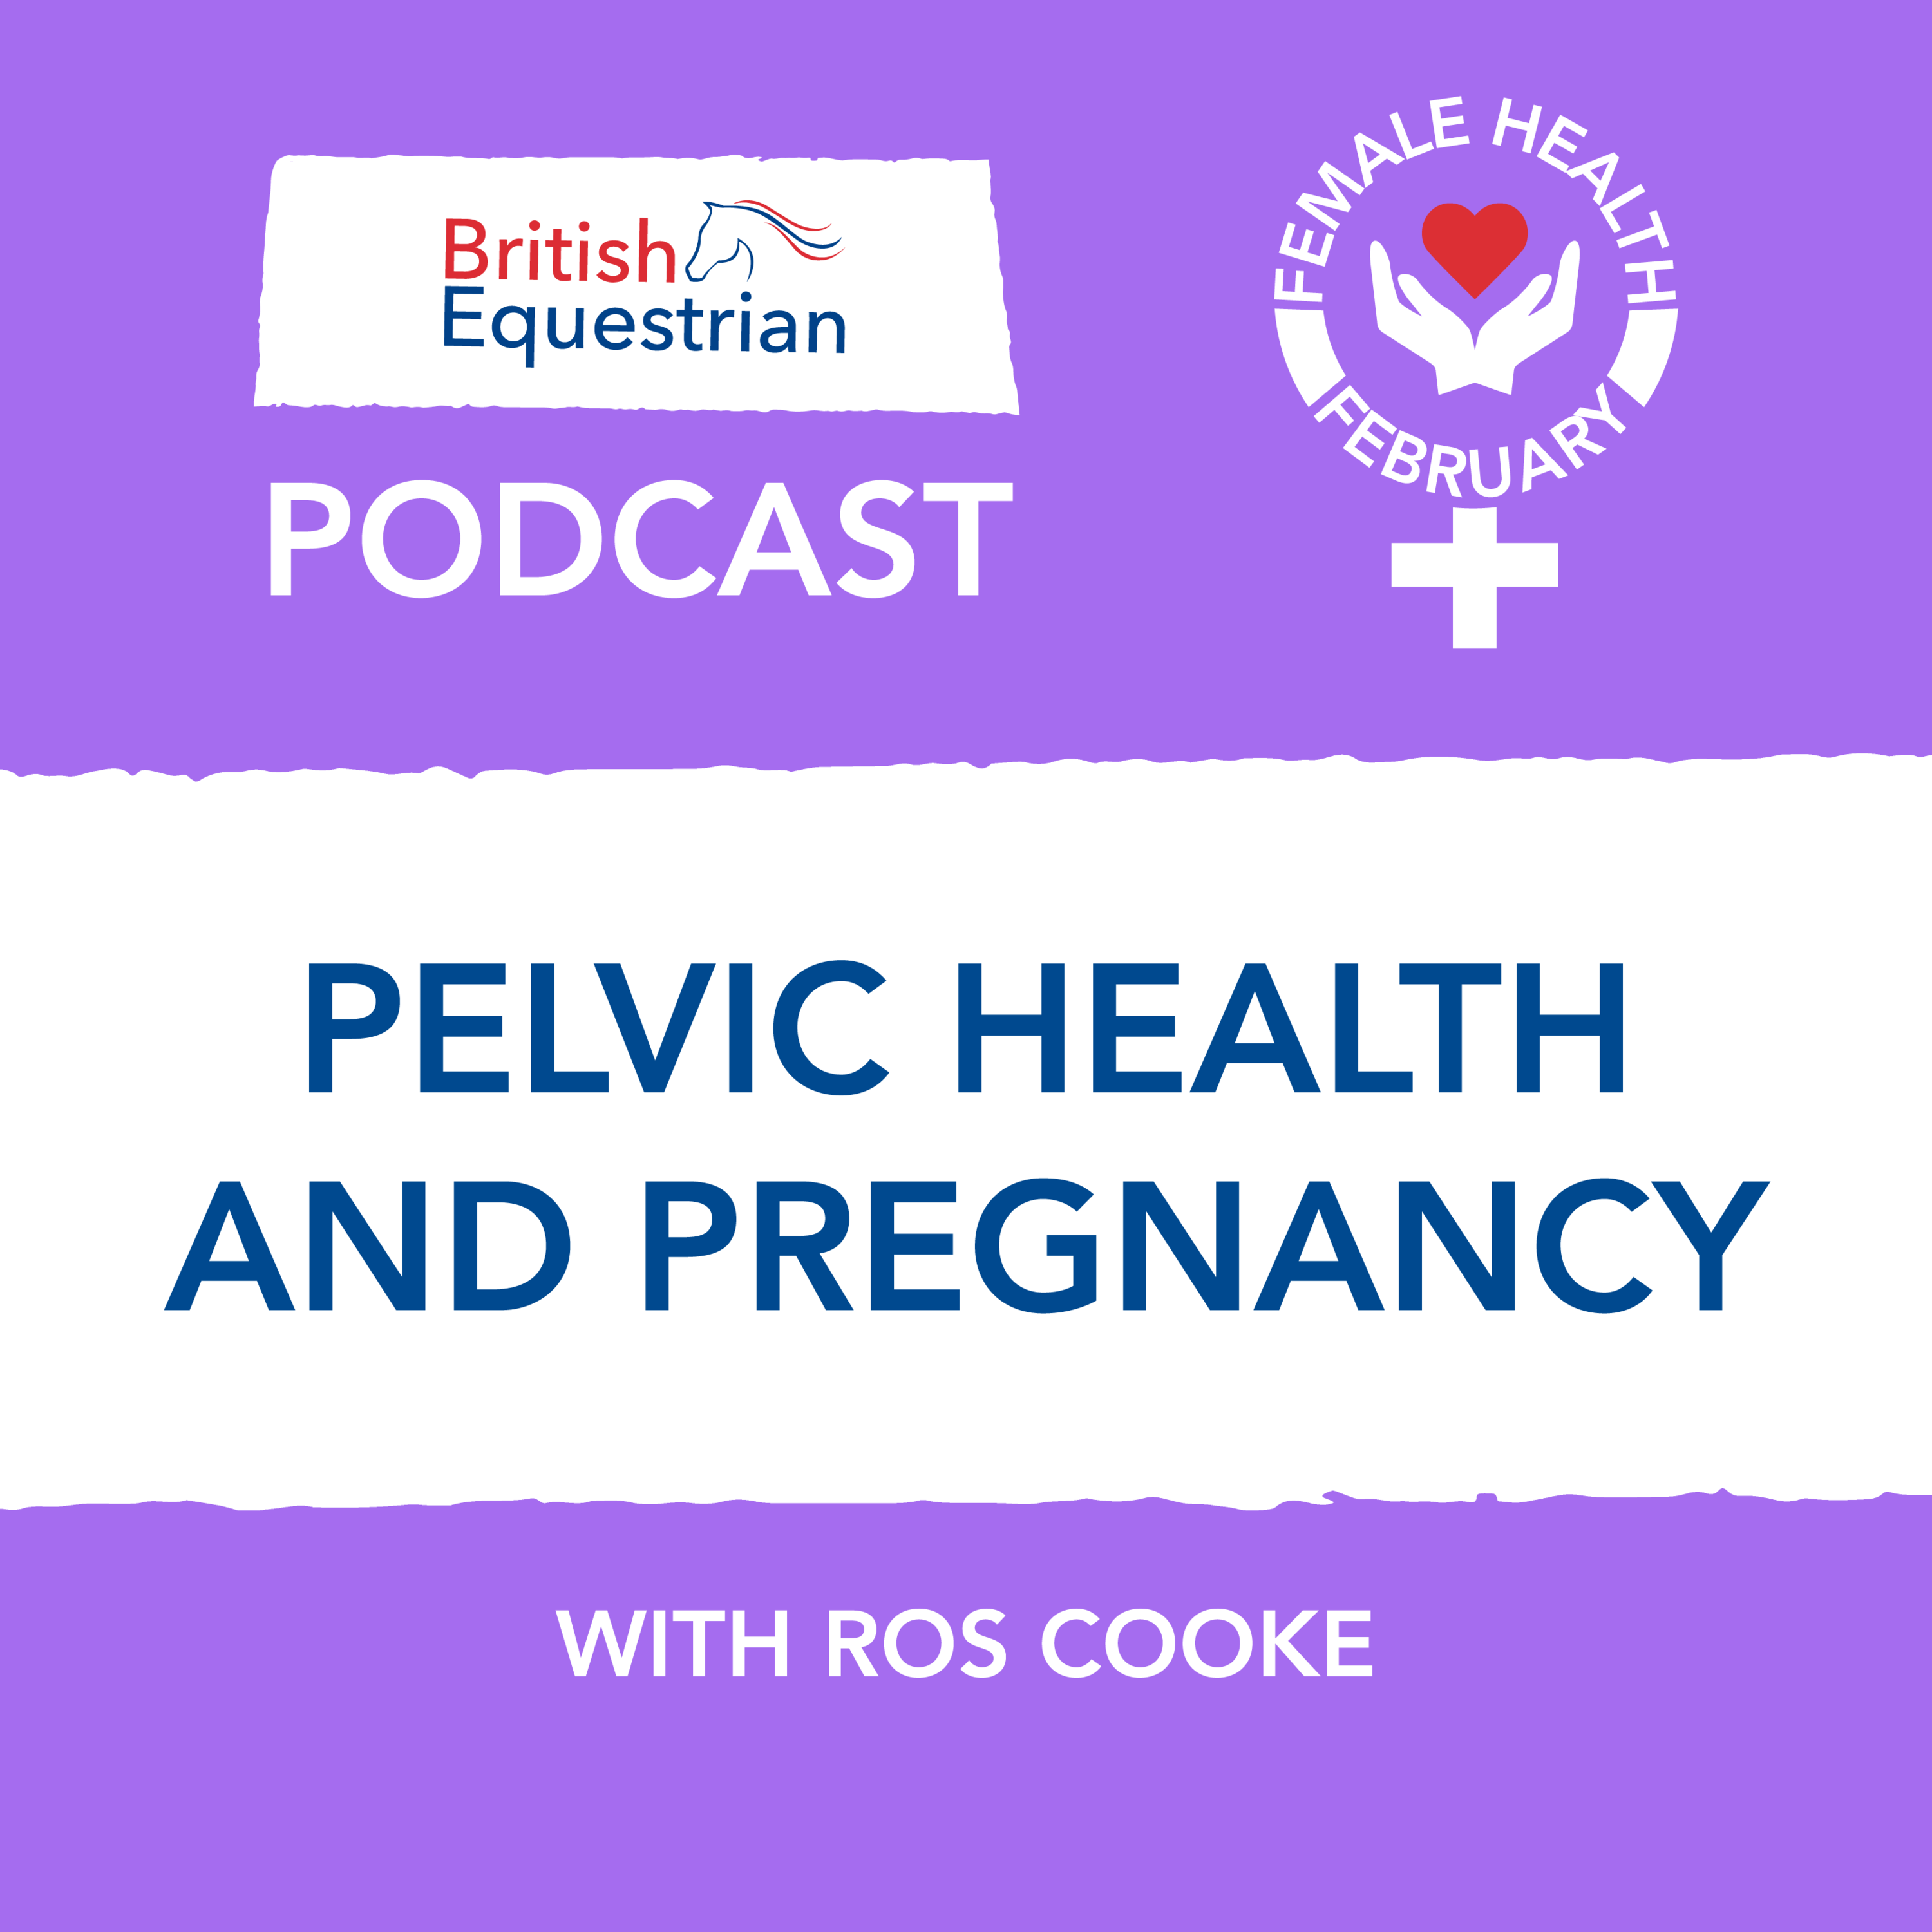 S2 Ep14: Female Health February: Pelvic Health and Pregnancy